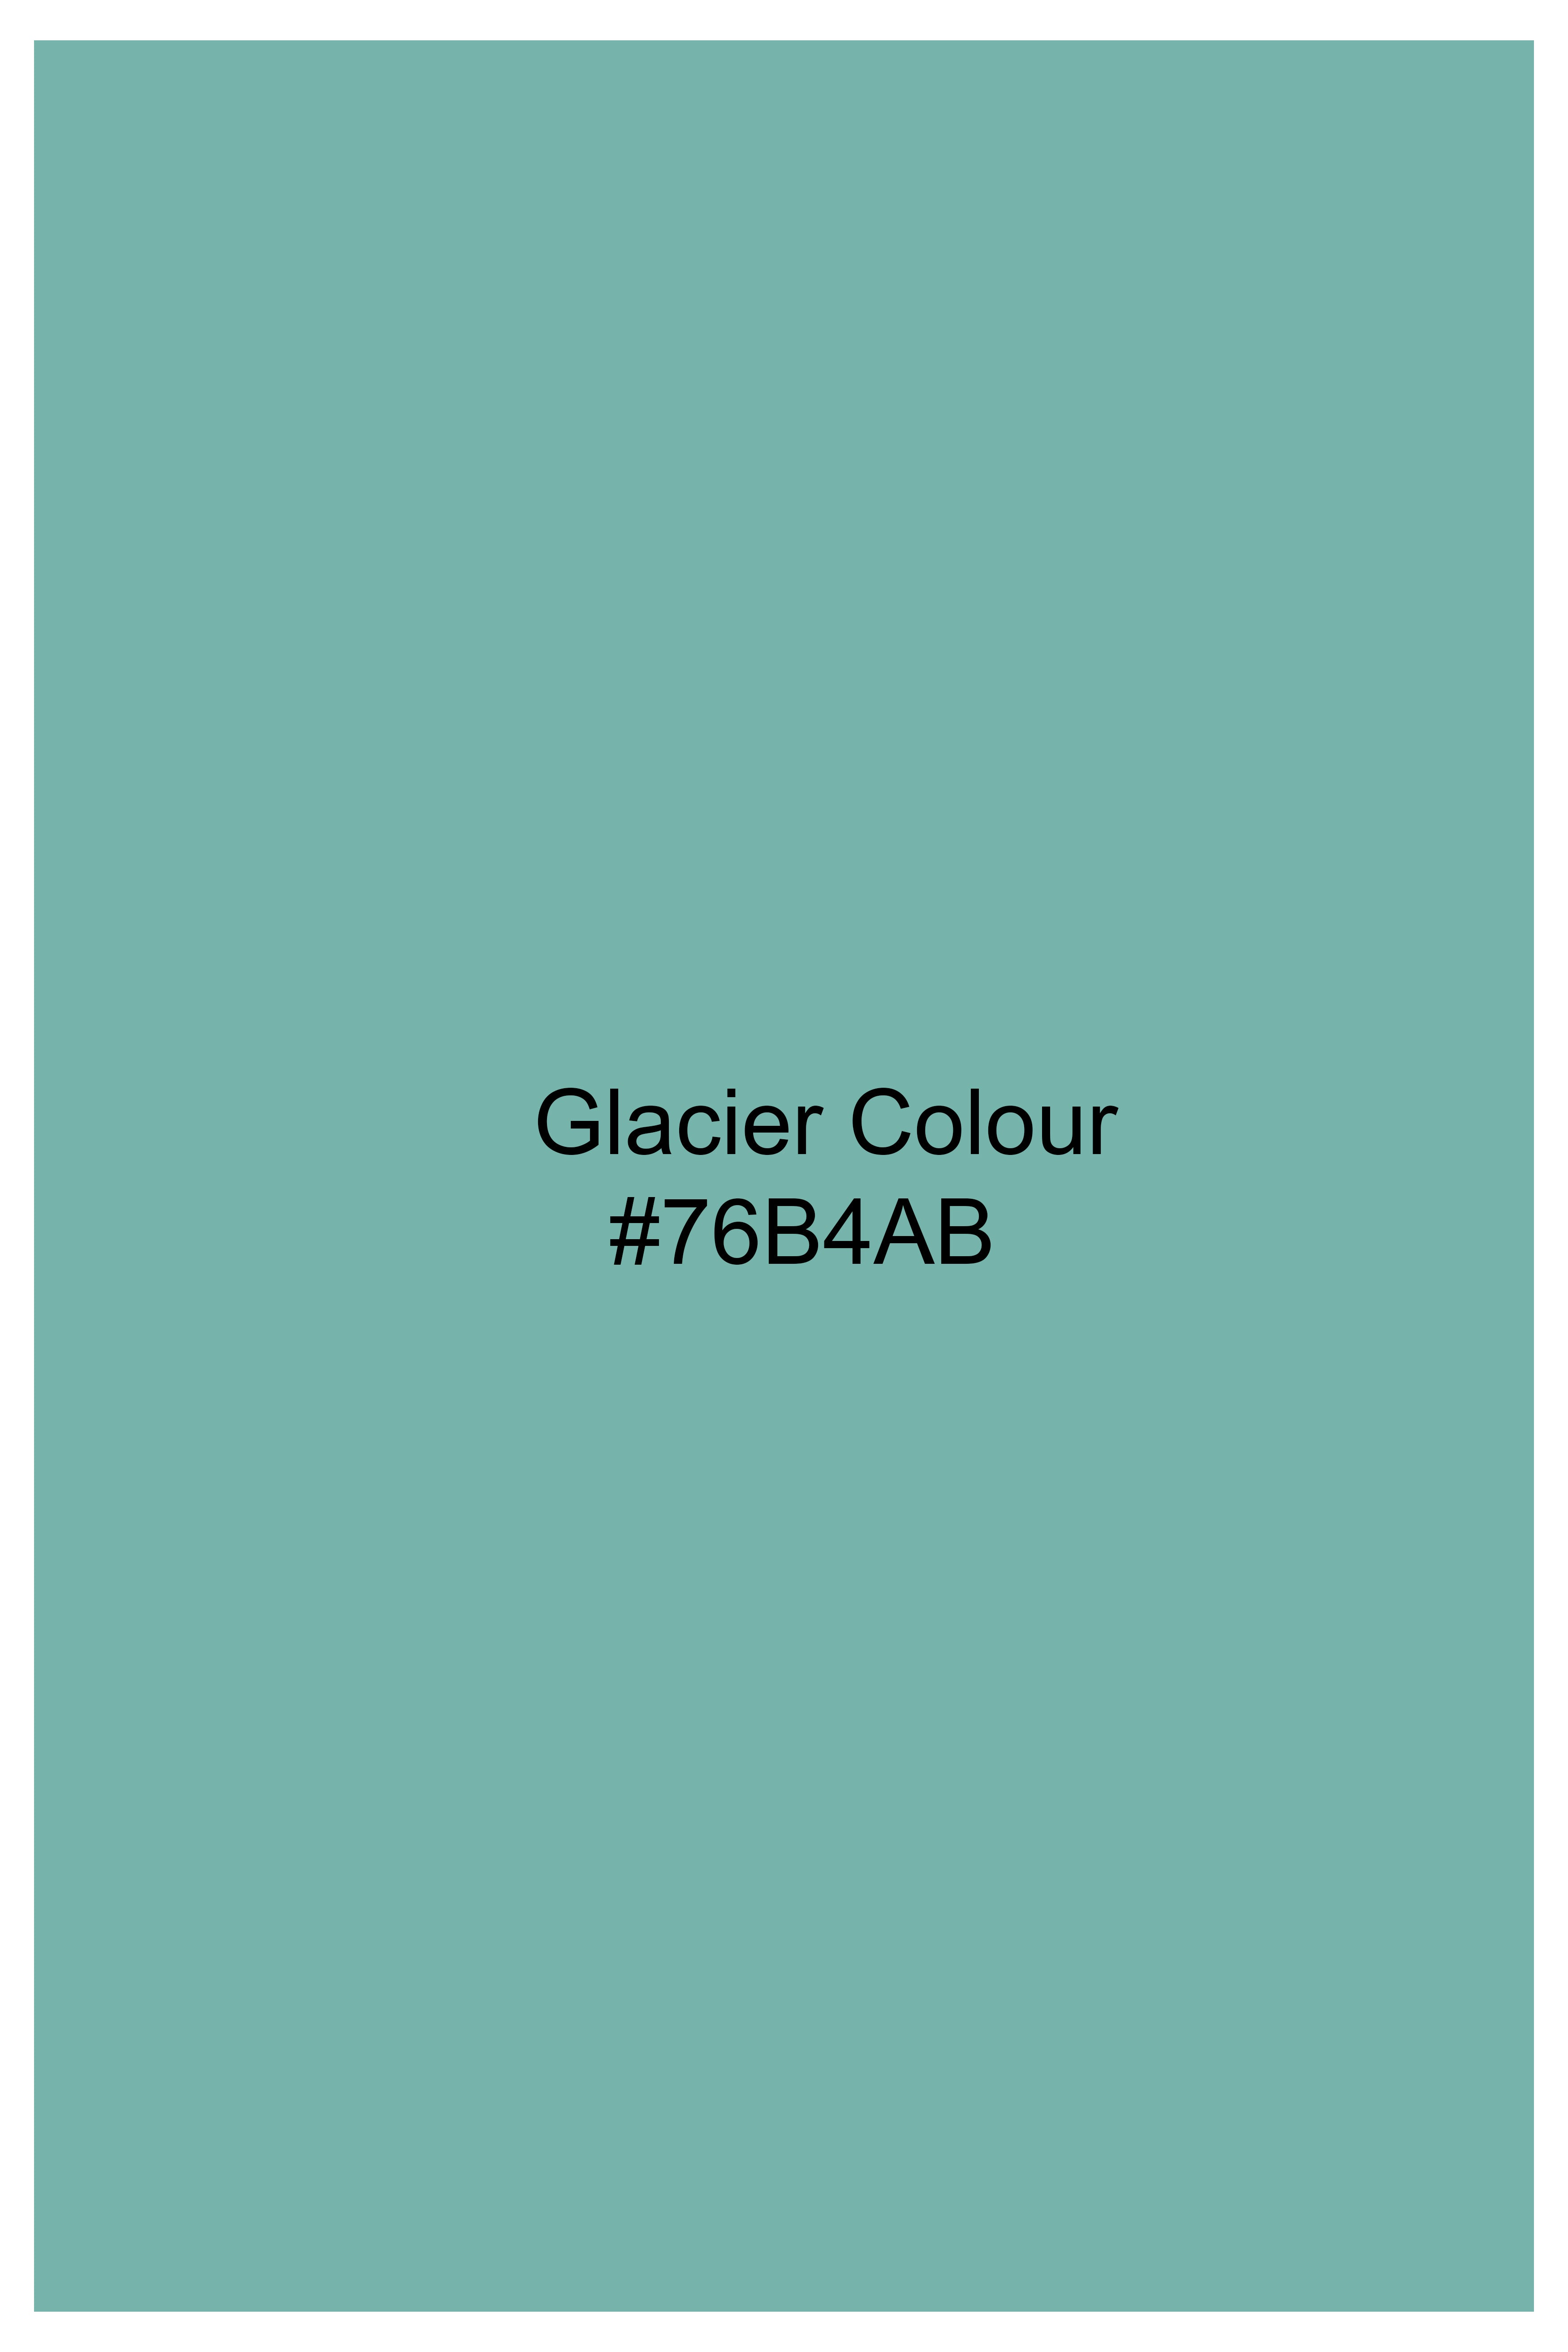 Glacier Green Lord Ganesha Embroidered Subtle Sheen Super Soft Premium Cotton Designer Shirt 8825-BLK-E246-38, 8825-BLK-E246-H-38, 8825-BLK-E246-39, 8825-BLK-E246-H-39, 8825-BLK-E246-40, 8825-BLK-E246-H-40, 8825-BLK-E246-42, 8825-BLK-E246-H-42, 8825-BLK-E246-44, 8825-BLK-E246-H-44, 8825-BLK-E246-46, 8825-BLK-E246-H-46, 8825-BLK-E246-48, 8825-BLK-E246-H-48, 8825-BLK-E246-50, 8825-BLK-E246-H-50, 8825-BLK-E246-52, 8825-BLK-E246-H-52